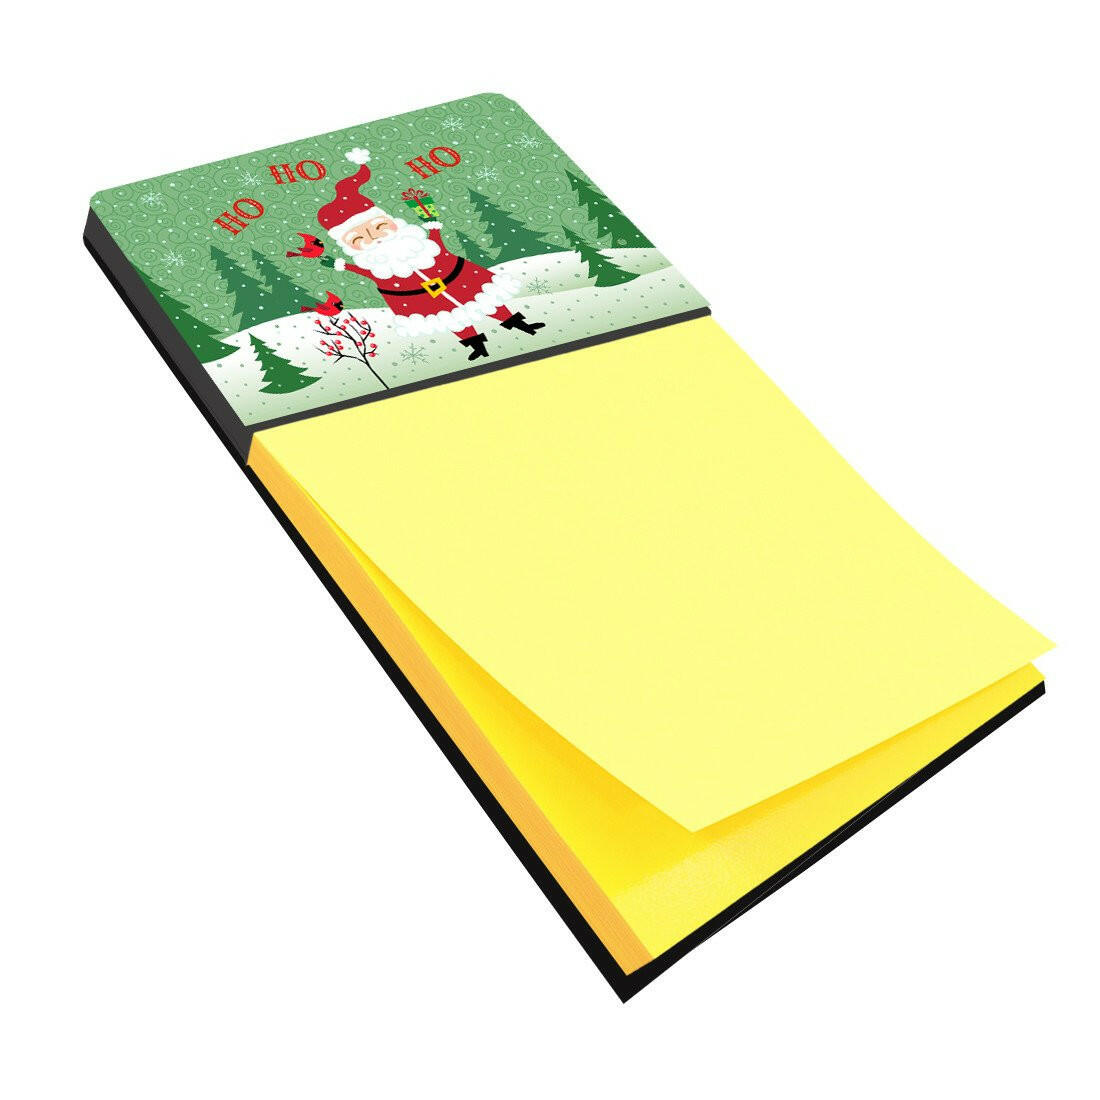 Merry Christmas Santa Claus Ho Ho Ho Sticky Note Holder VHA3016SN by Caroline's Treasures